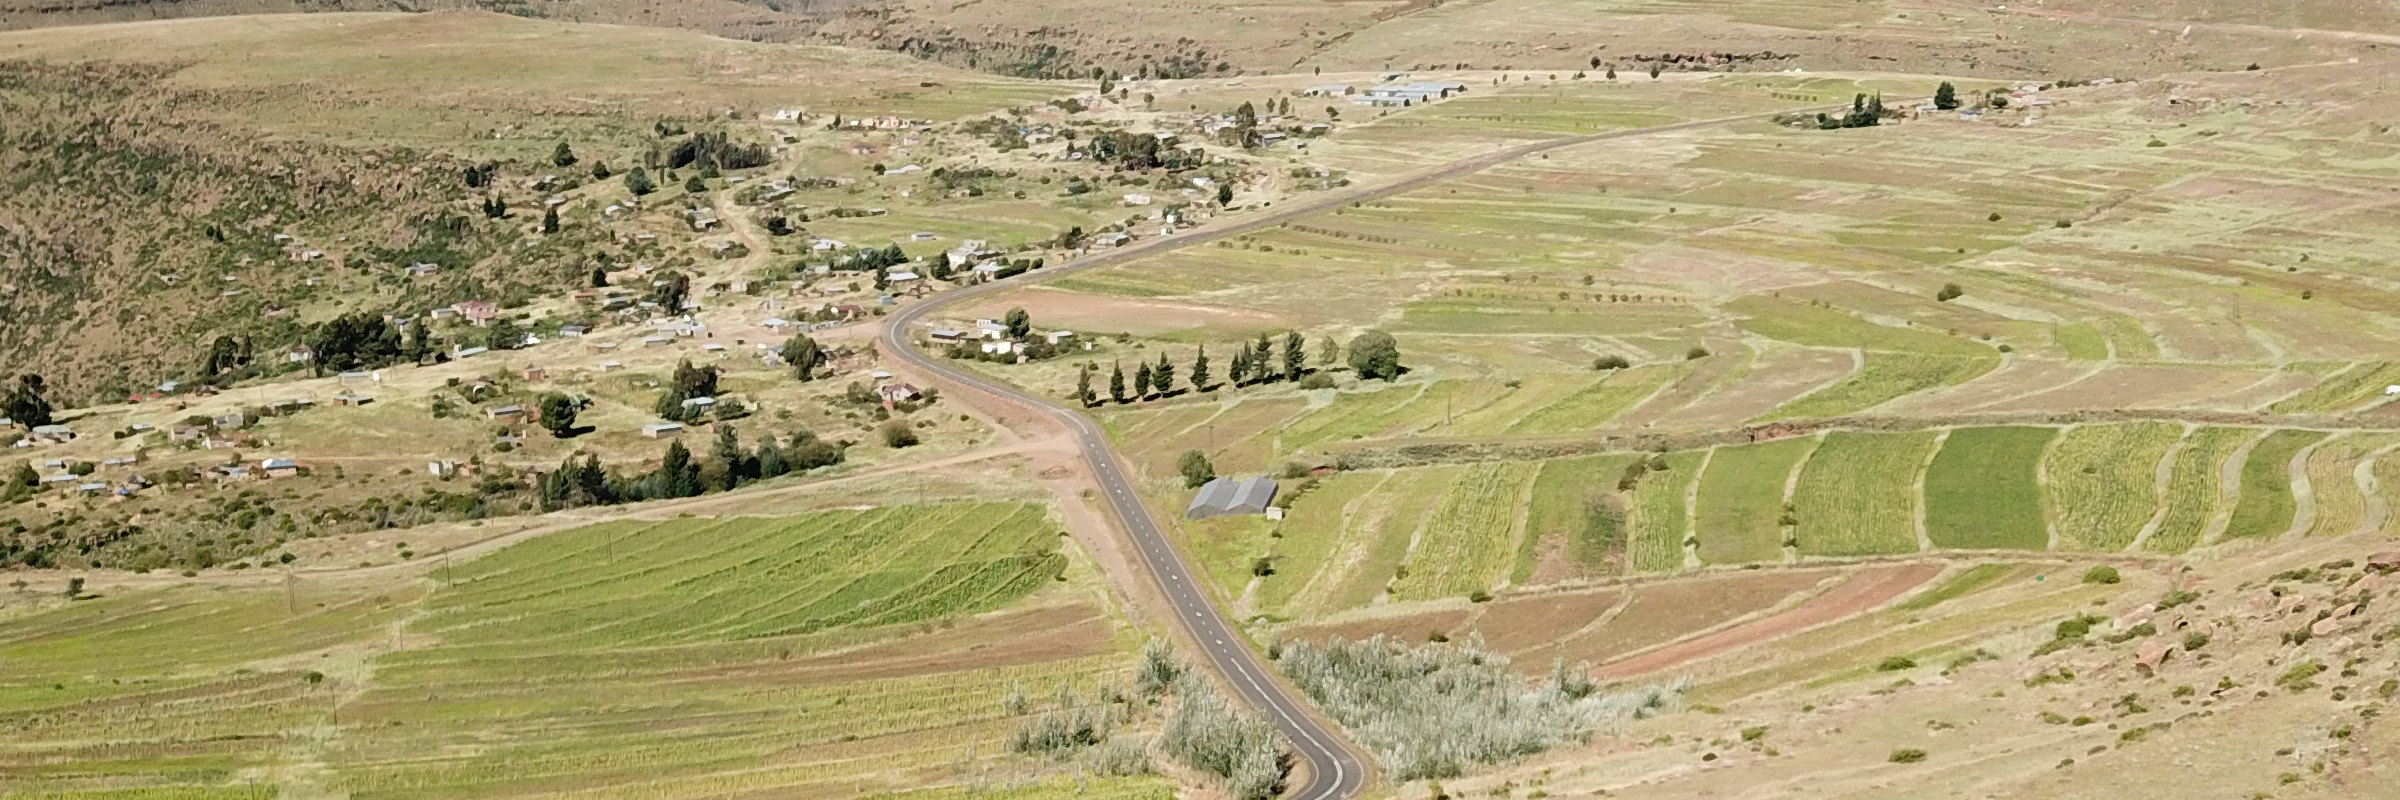 Sehlabathebe, Lesotho Ha Mpiti to Sehlabathebe Road (91 km)